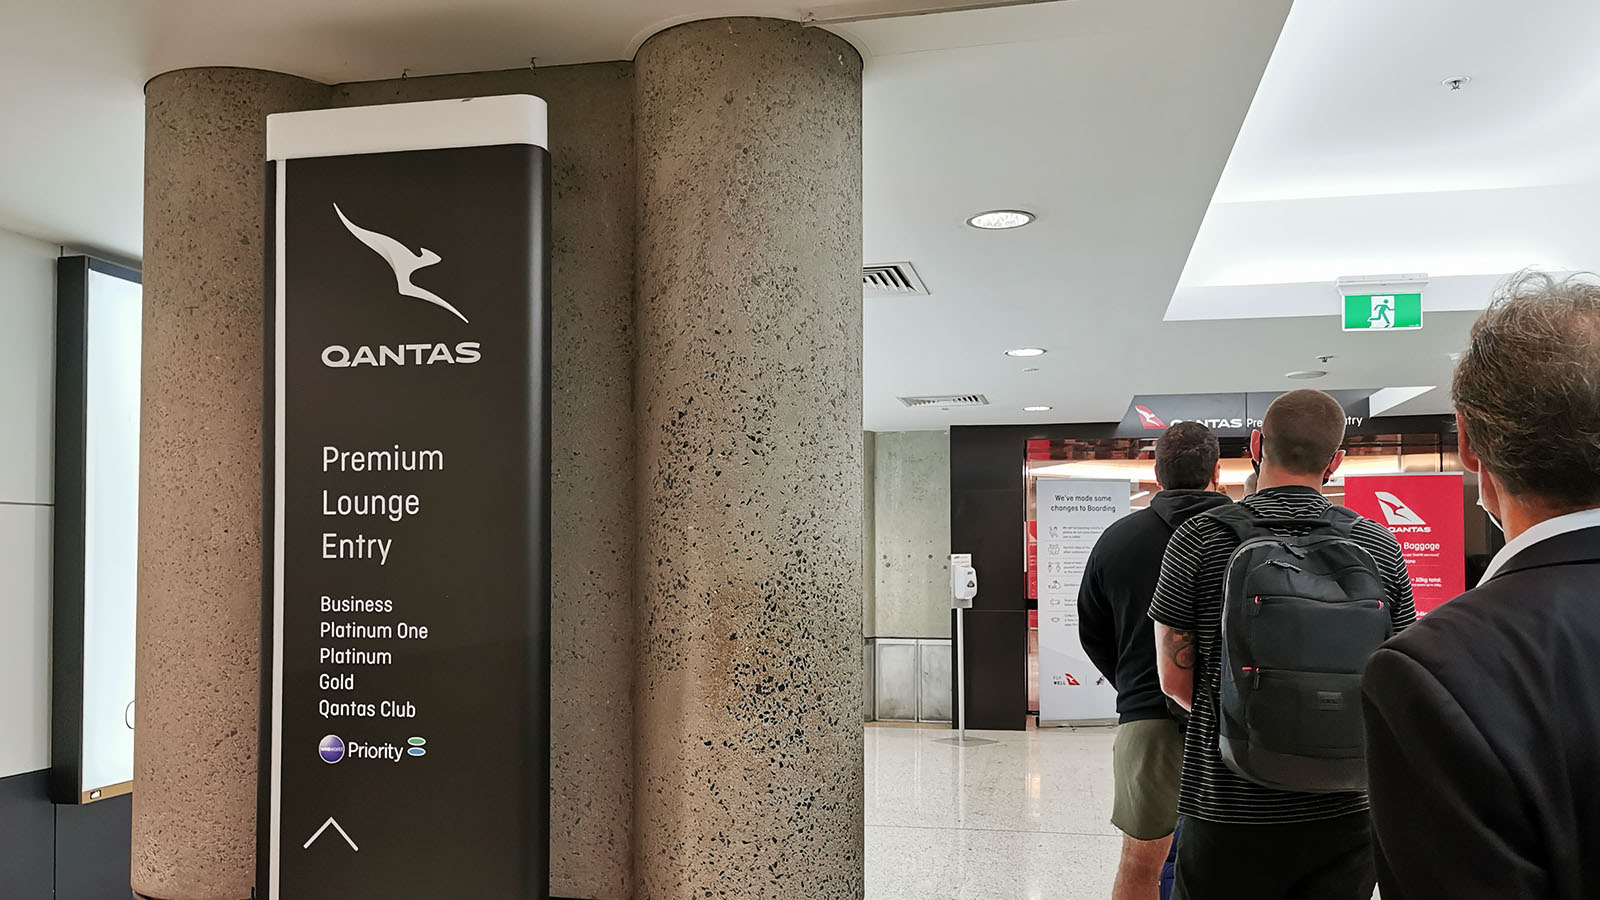 Qantas Premium Lounge Entry